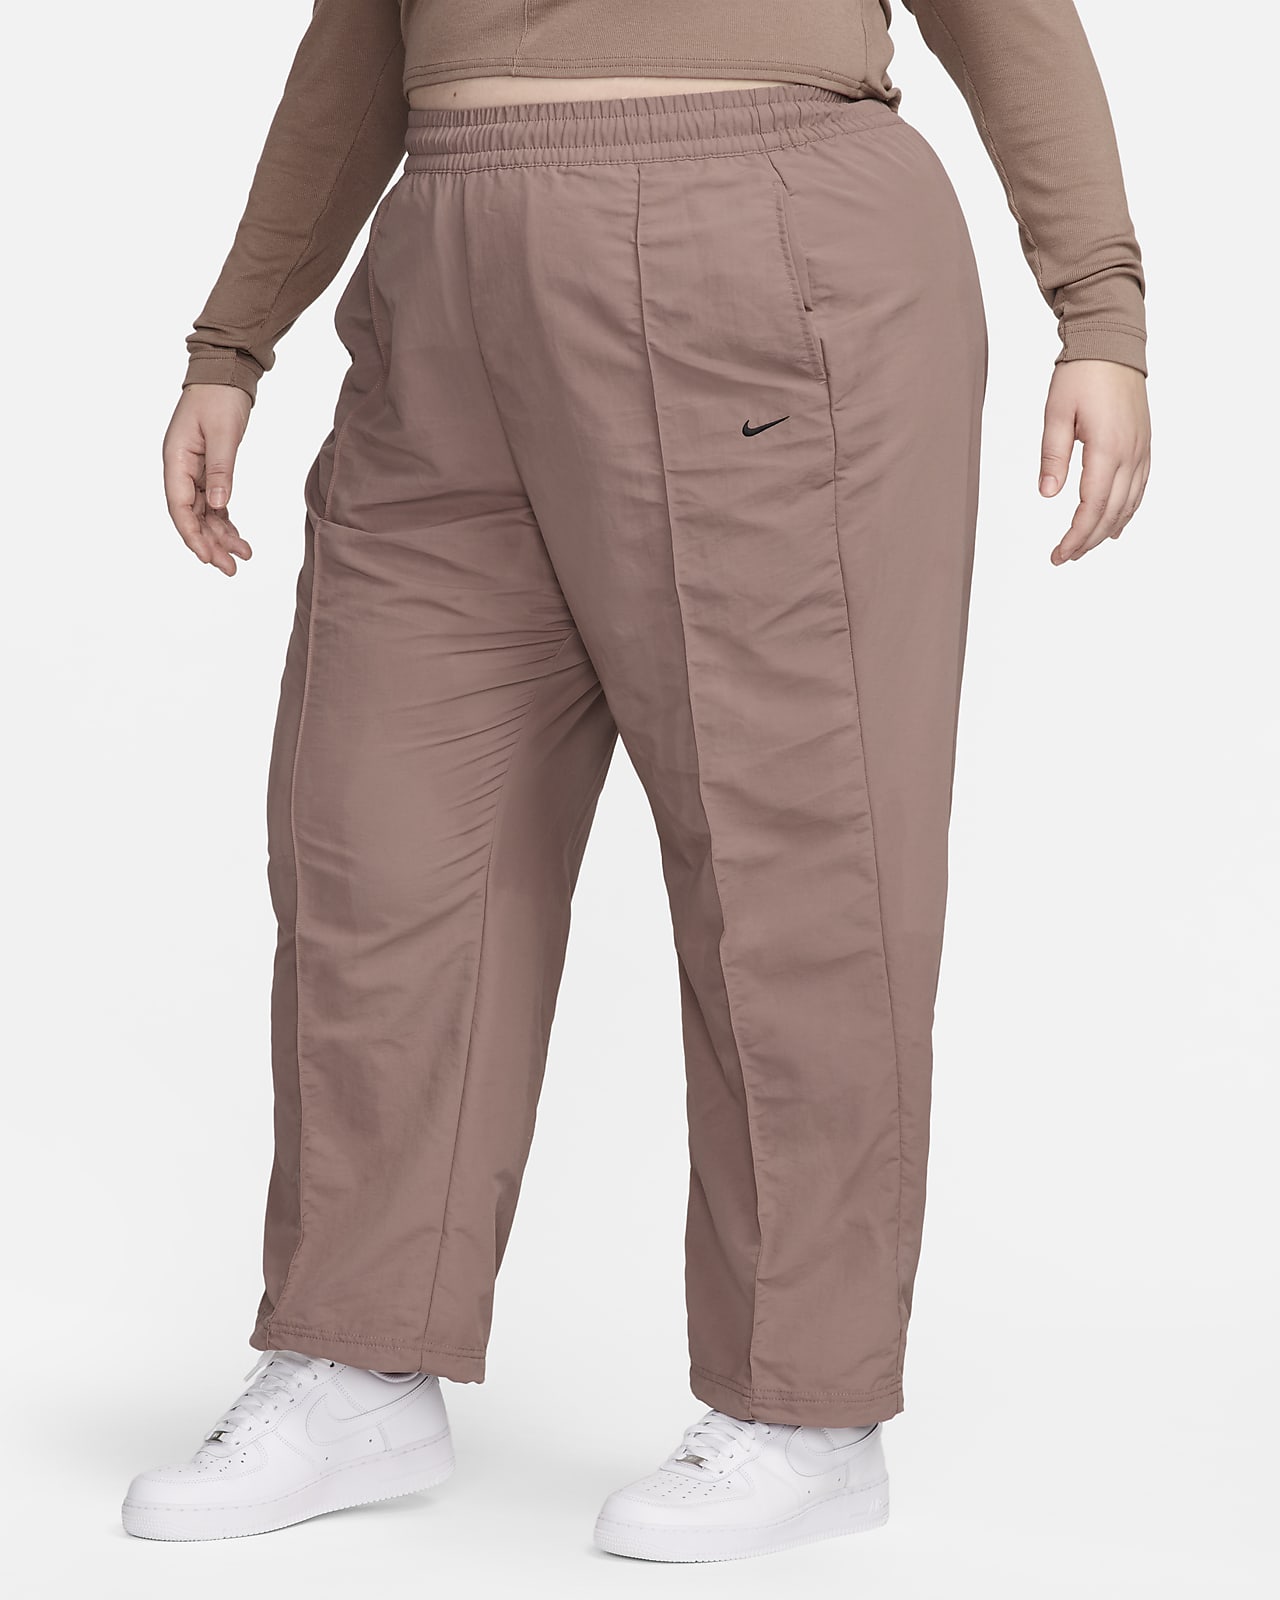 Pants de tiro medio con dobladillo abierto para mujer (talla grande) Nike Sportswear Everything Wovens